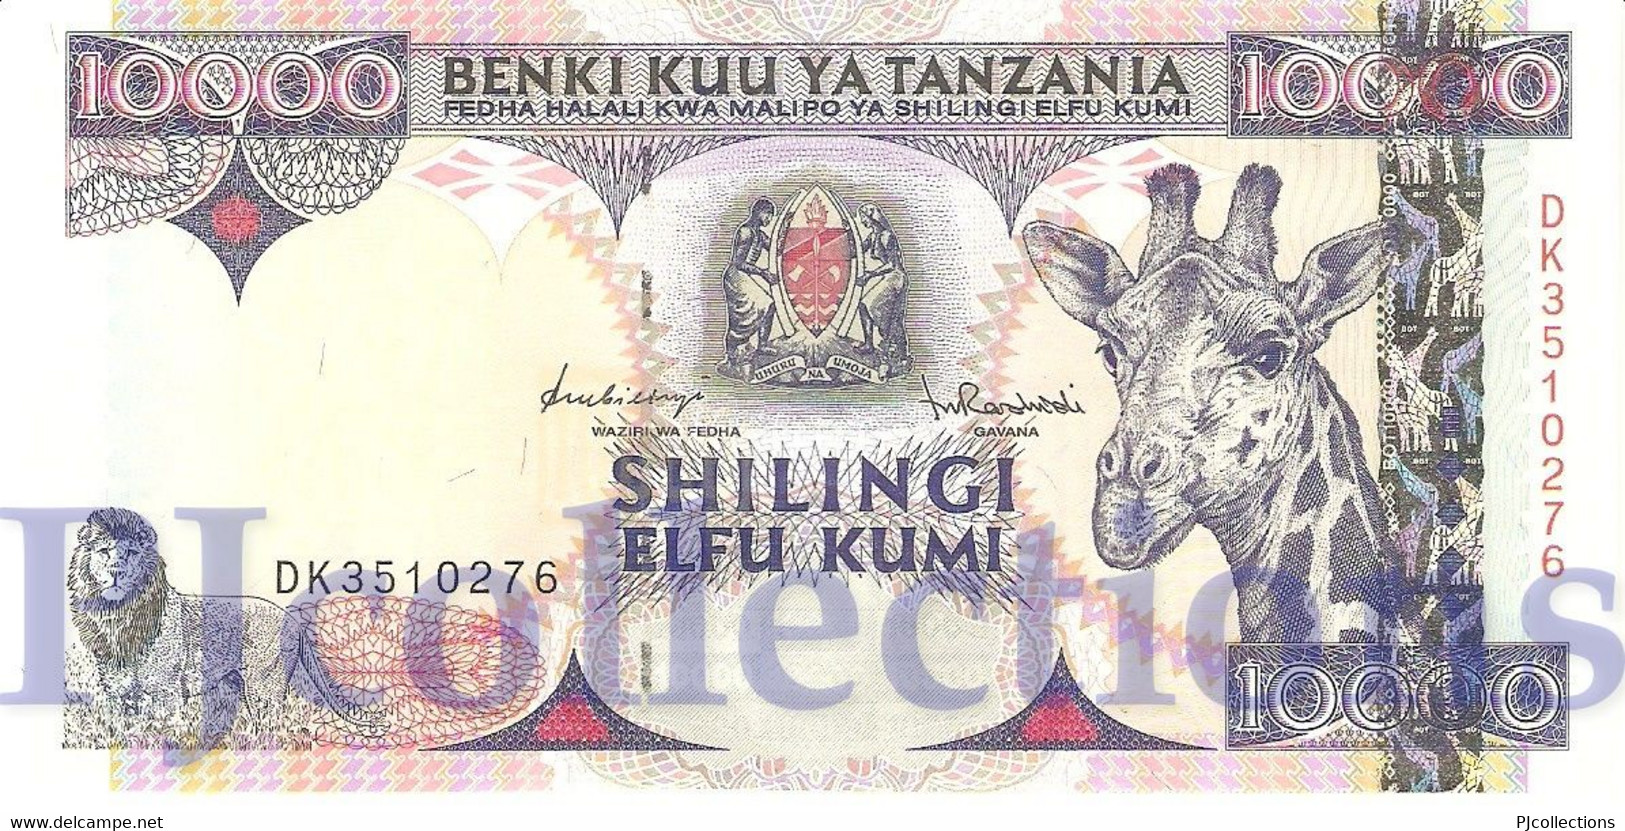 TANZANIA 10000 SHILINGI 1997 PICK 33 UNC - Tanzanie